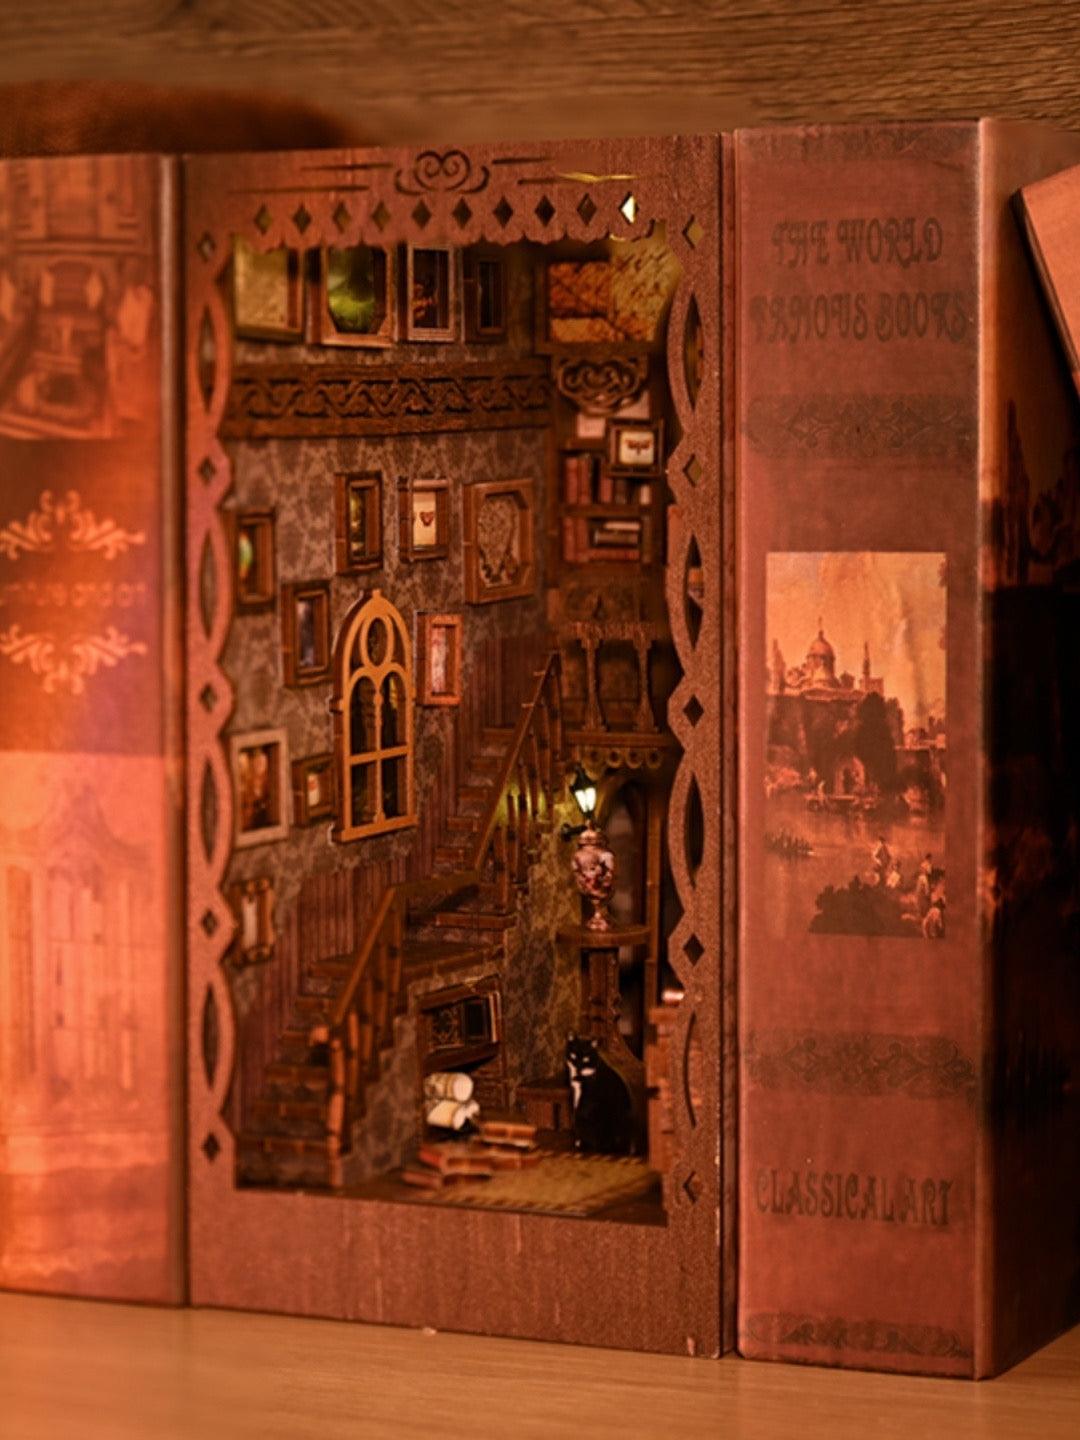 bookstore themed diy book nook kit for bookshelf insert diorama miniature crafts